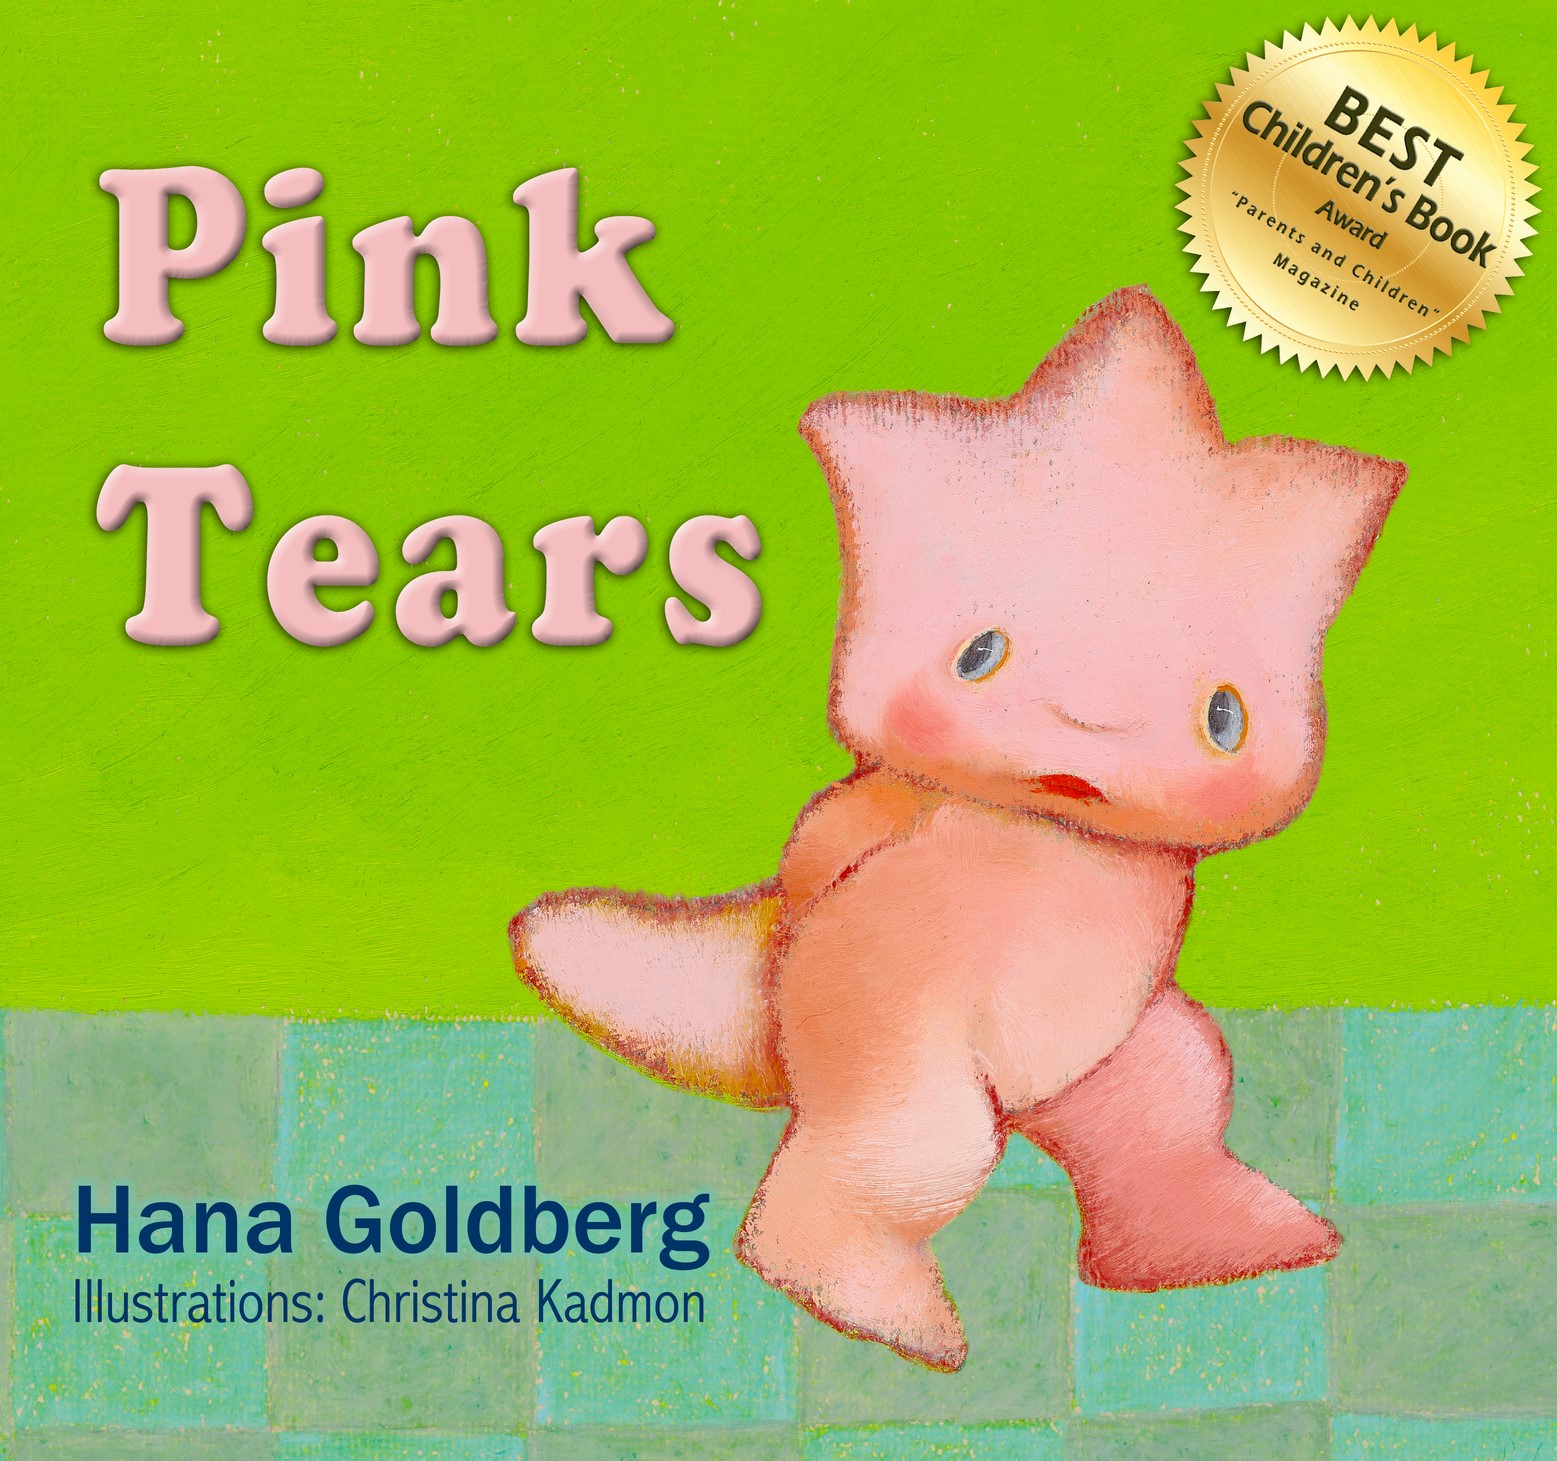 FREE: Children’s Book: Pink Tears: Best Children’s Book Award (Ages 3-9) by Hana Goldberg